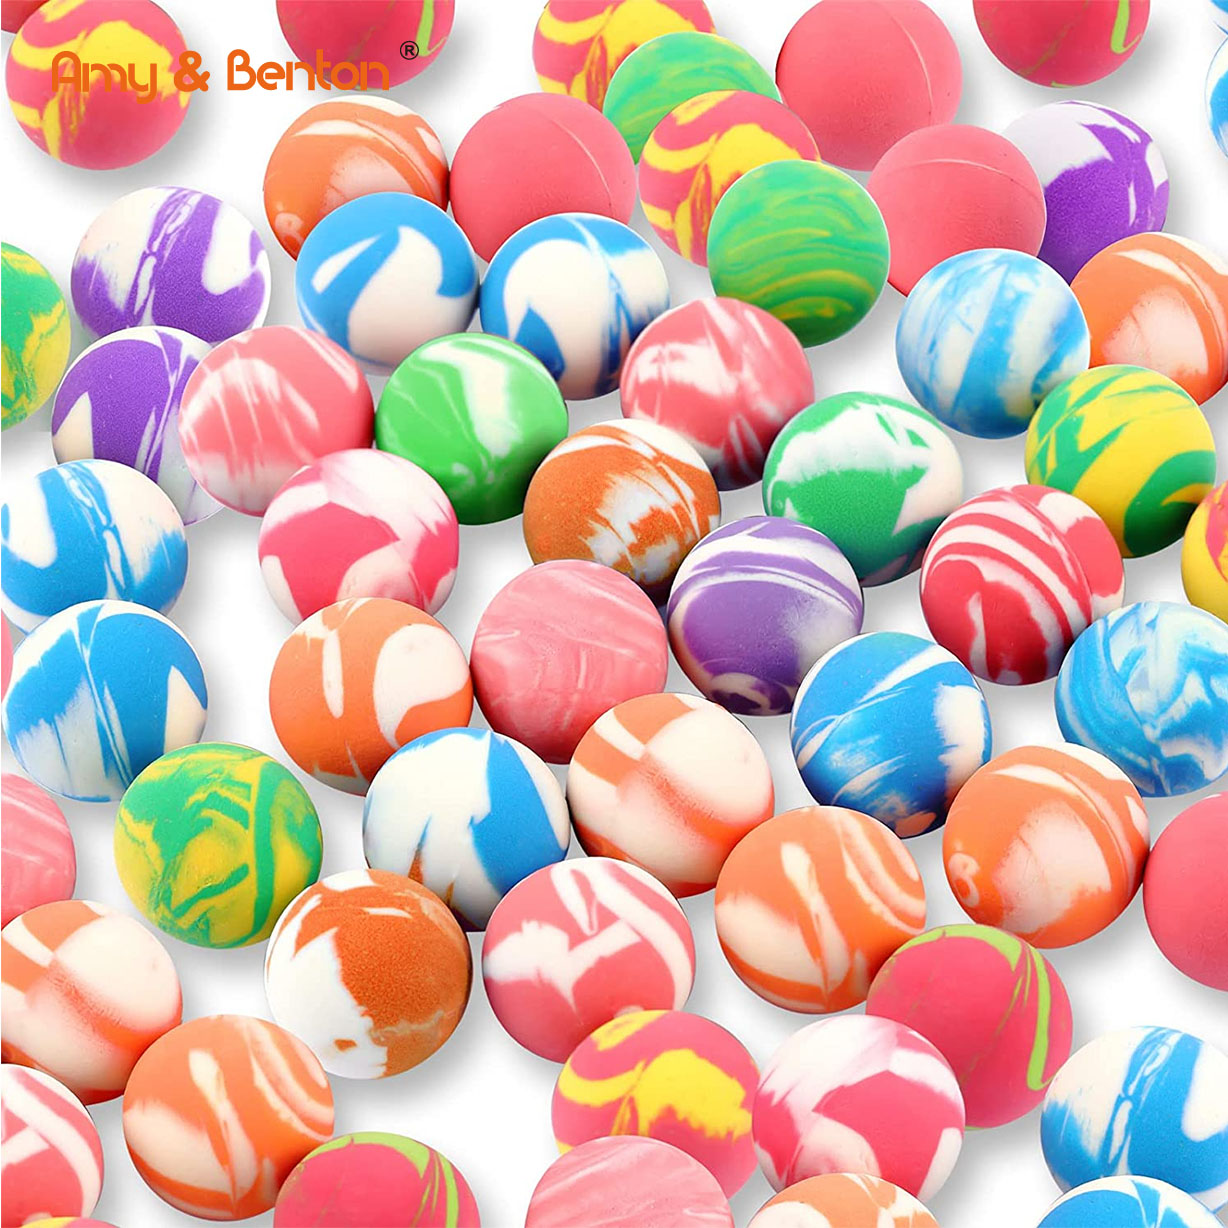 Kleine Hüpfbälle, hohe Hüpfbälle aus Gummi, 27 mm große Neon-Hüpfbälle für Spielpreise, Partygeschenke, Verkaufsautomaten, Outdoor-Aktivitäten (mehrfarbiger Stil). Empfohlenes Bild